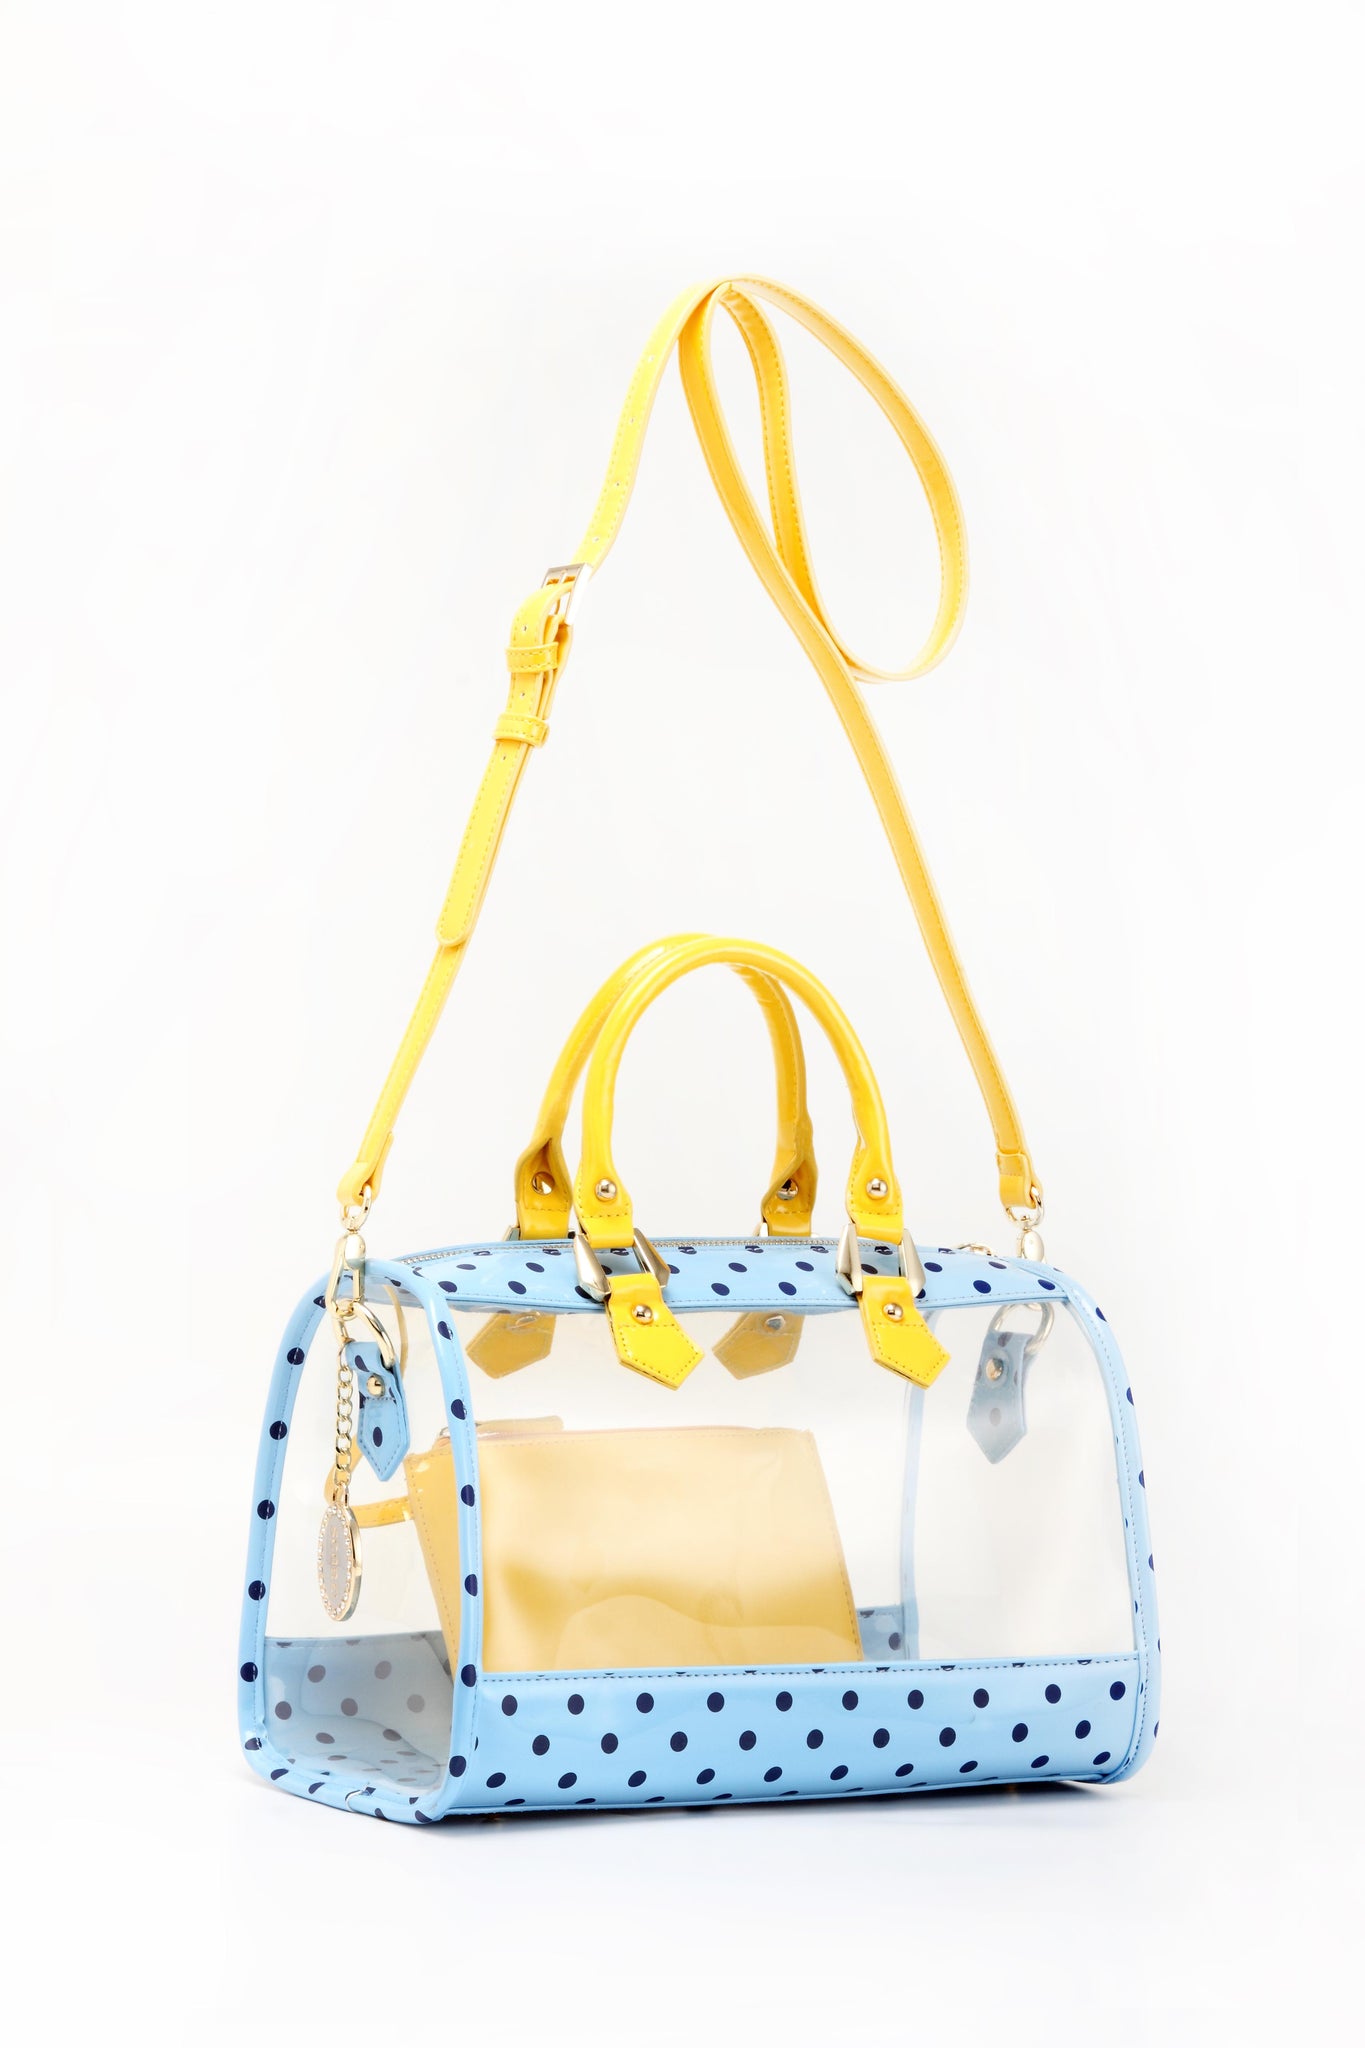 Spartina Greek Key Beige Blue Yellow Purse Handbag Shoulder Orange Lining  Linen | eBay